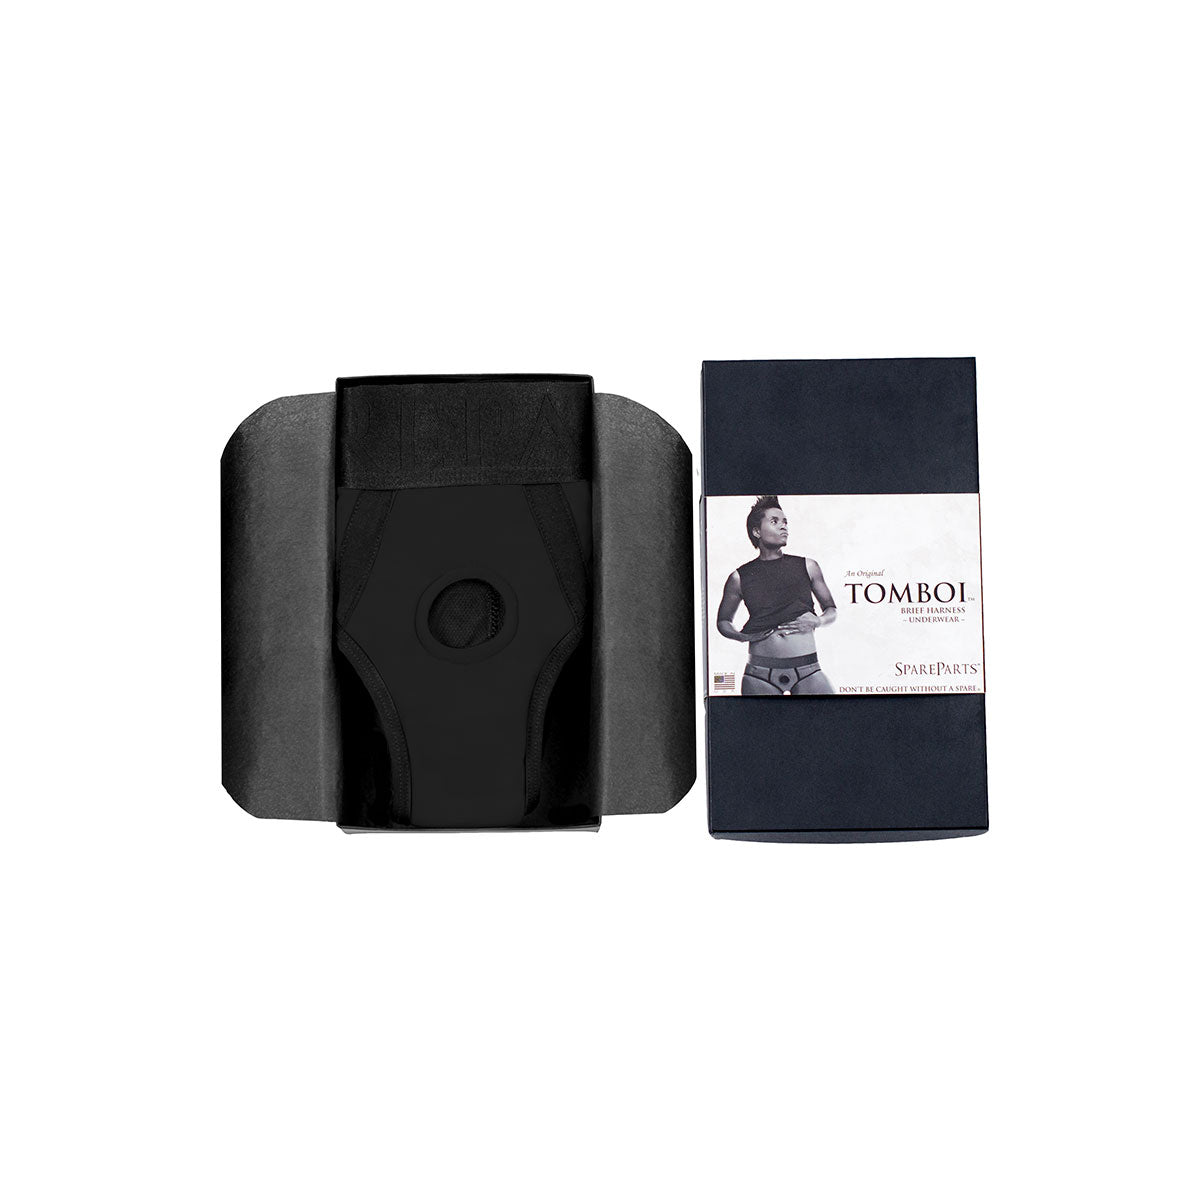 SpareParts Tomboi Harness Black/Black Nylon - Small